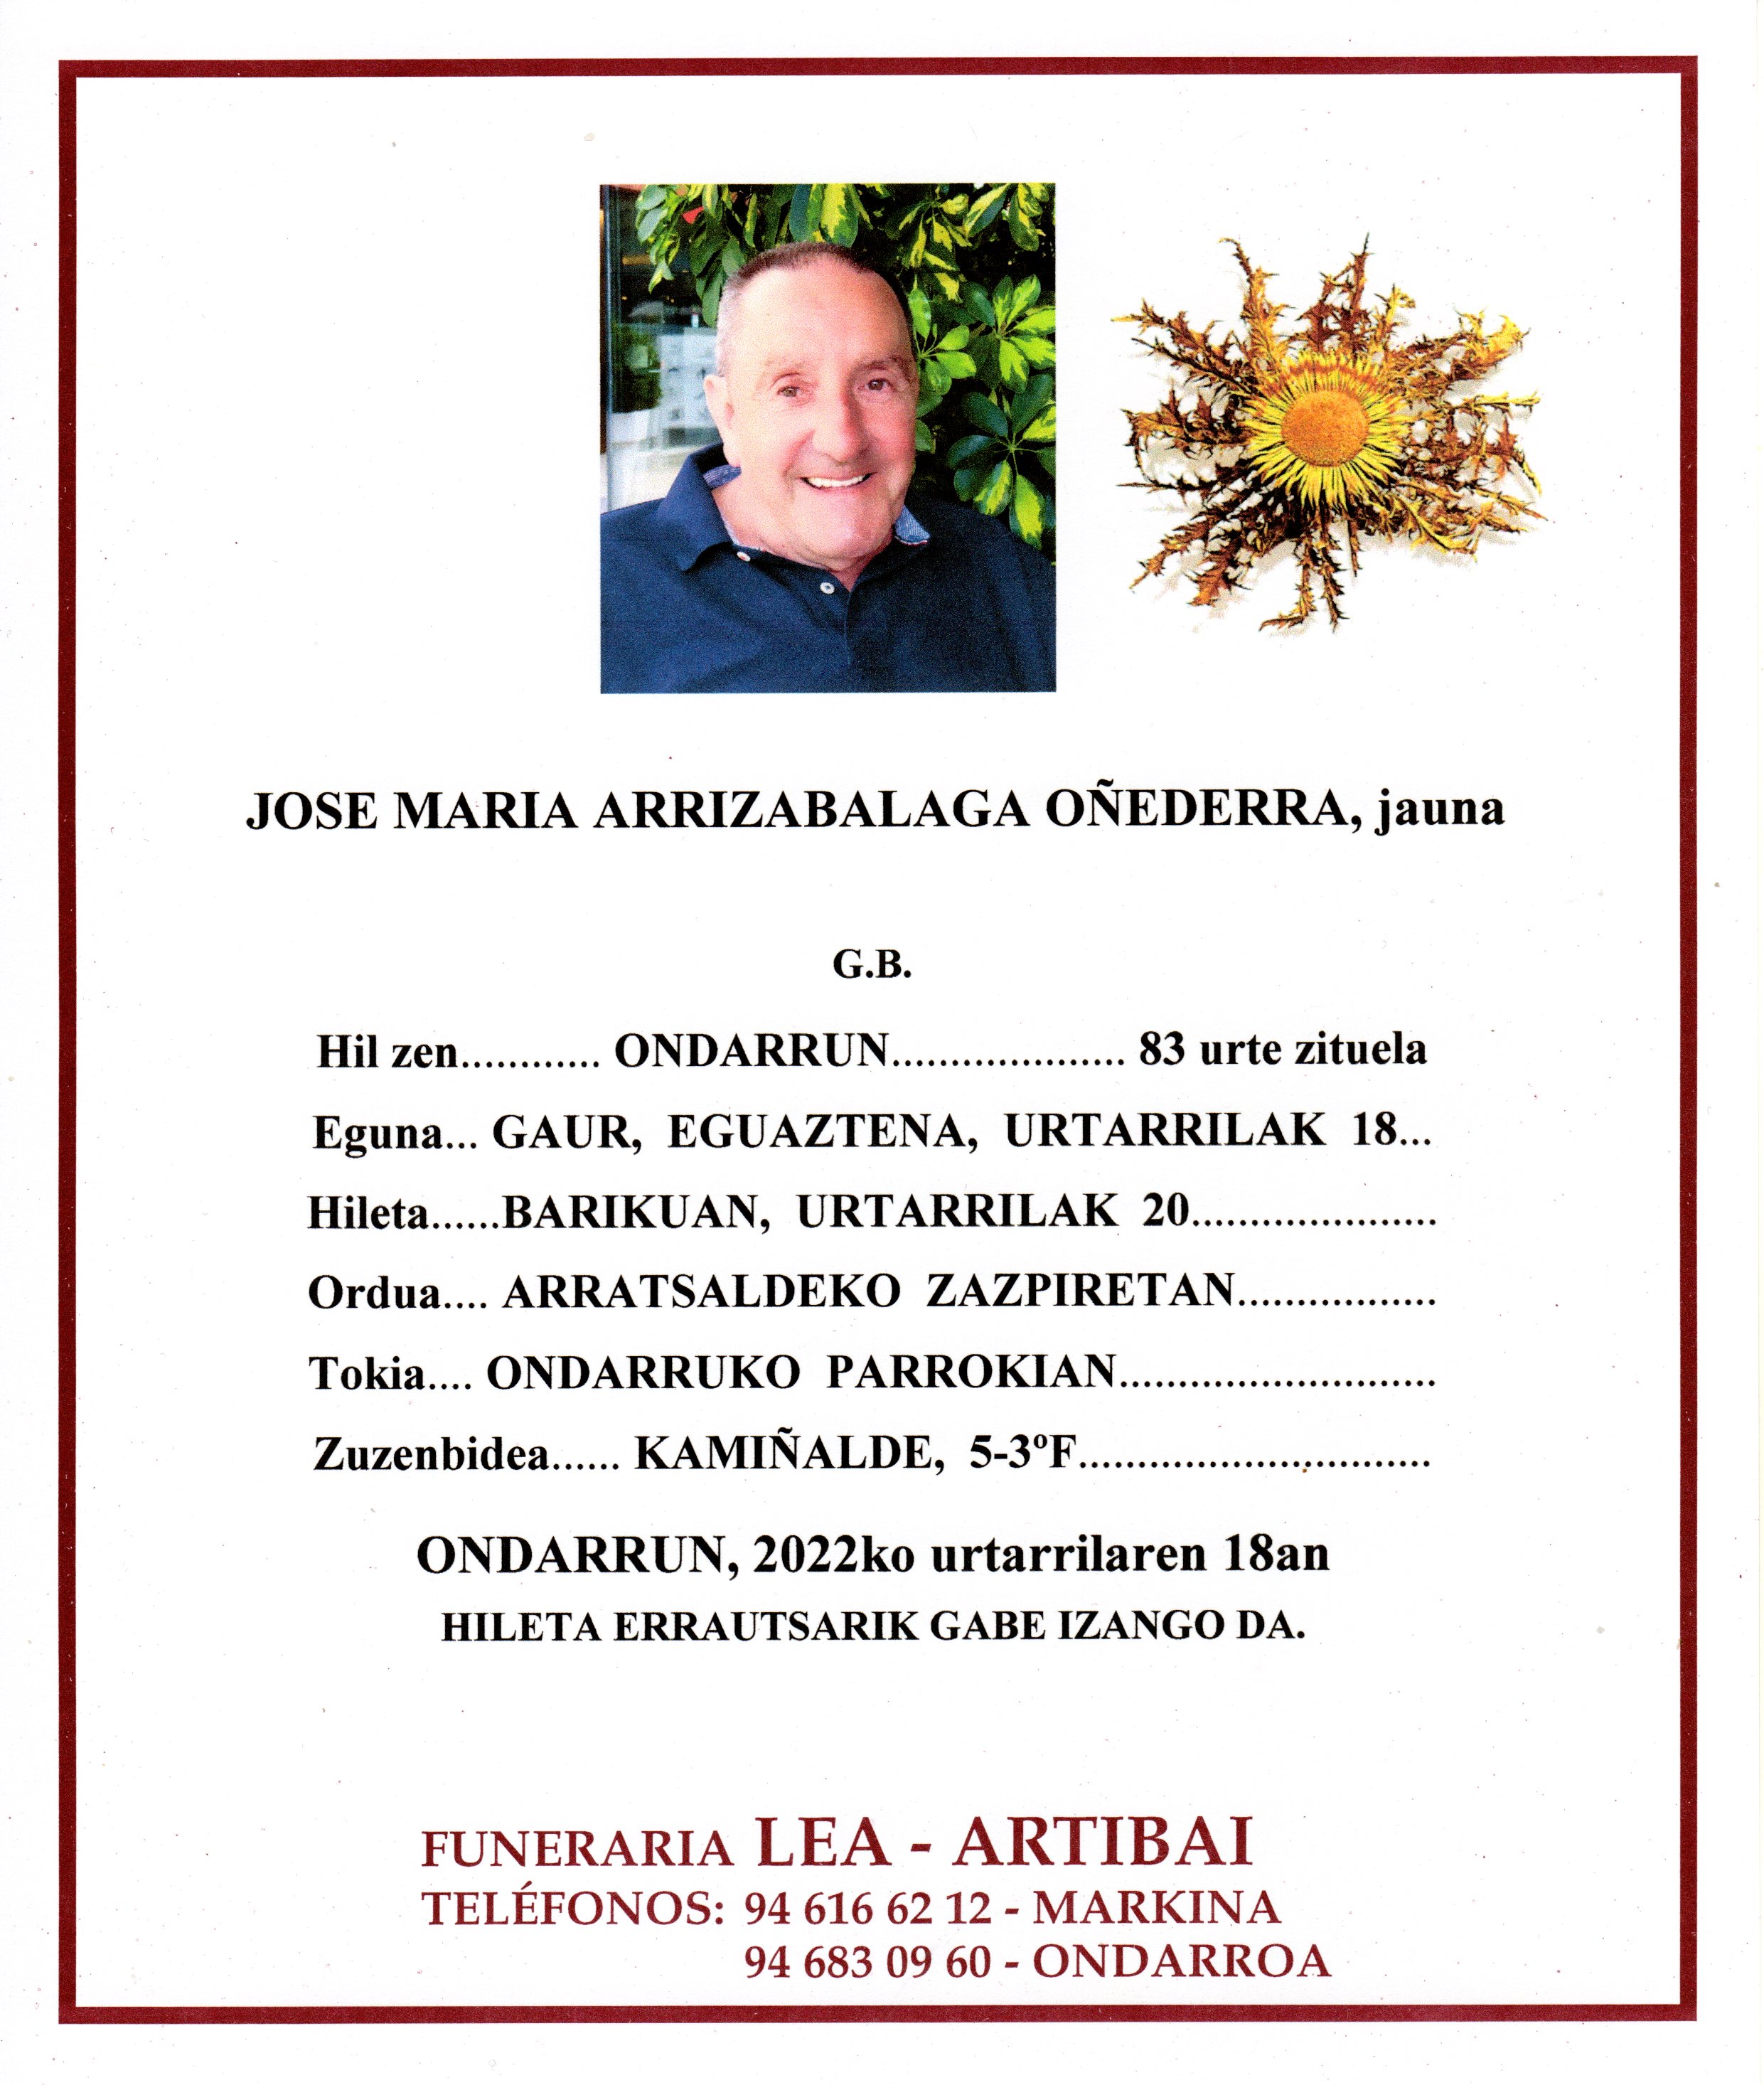 Jose Maria Arrizabalaga Oñederra